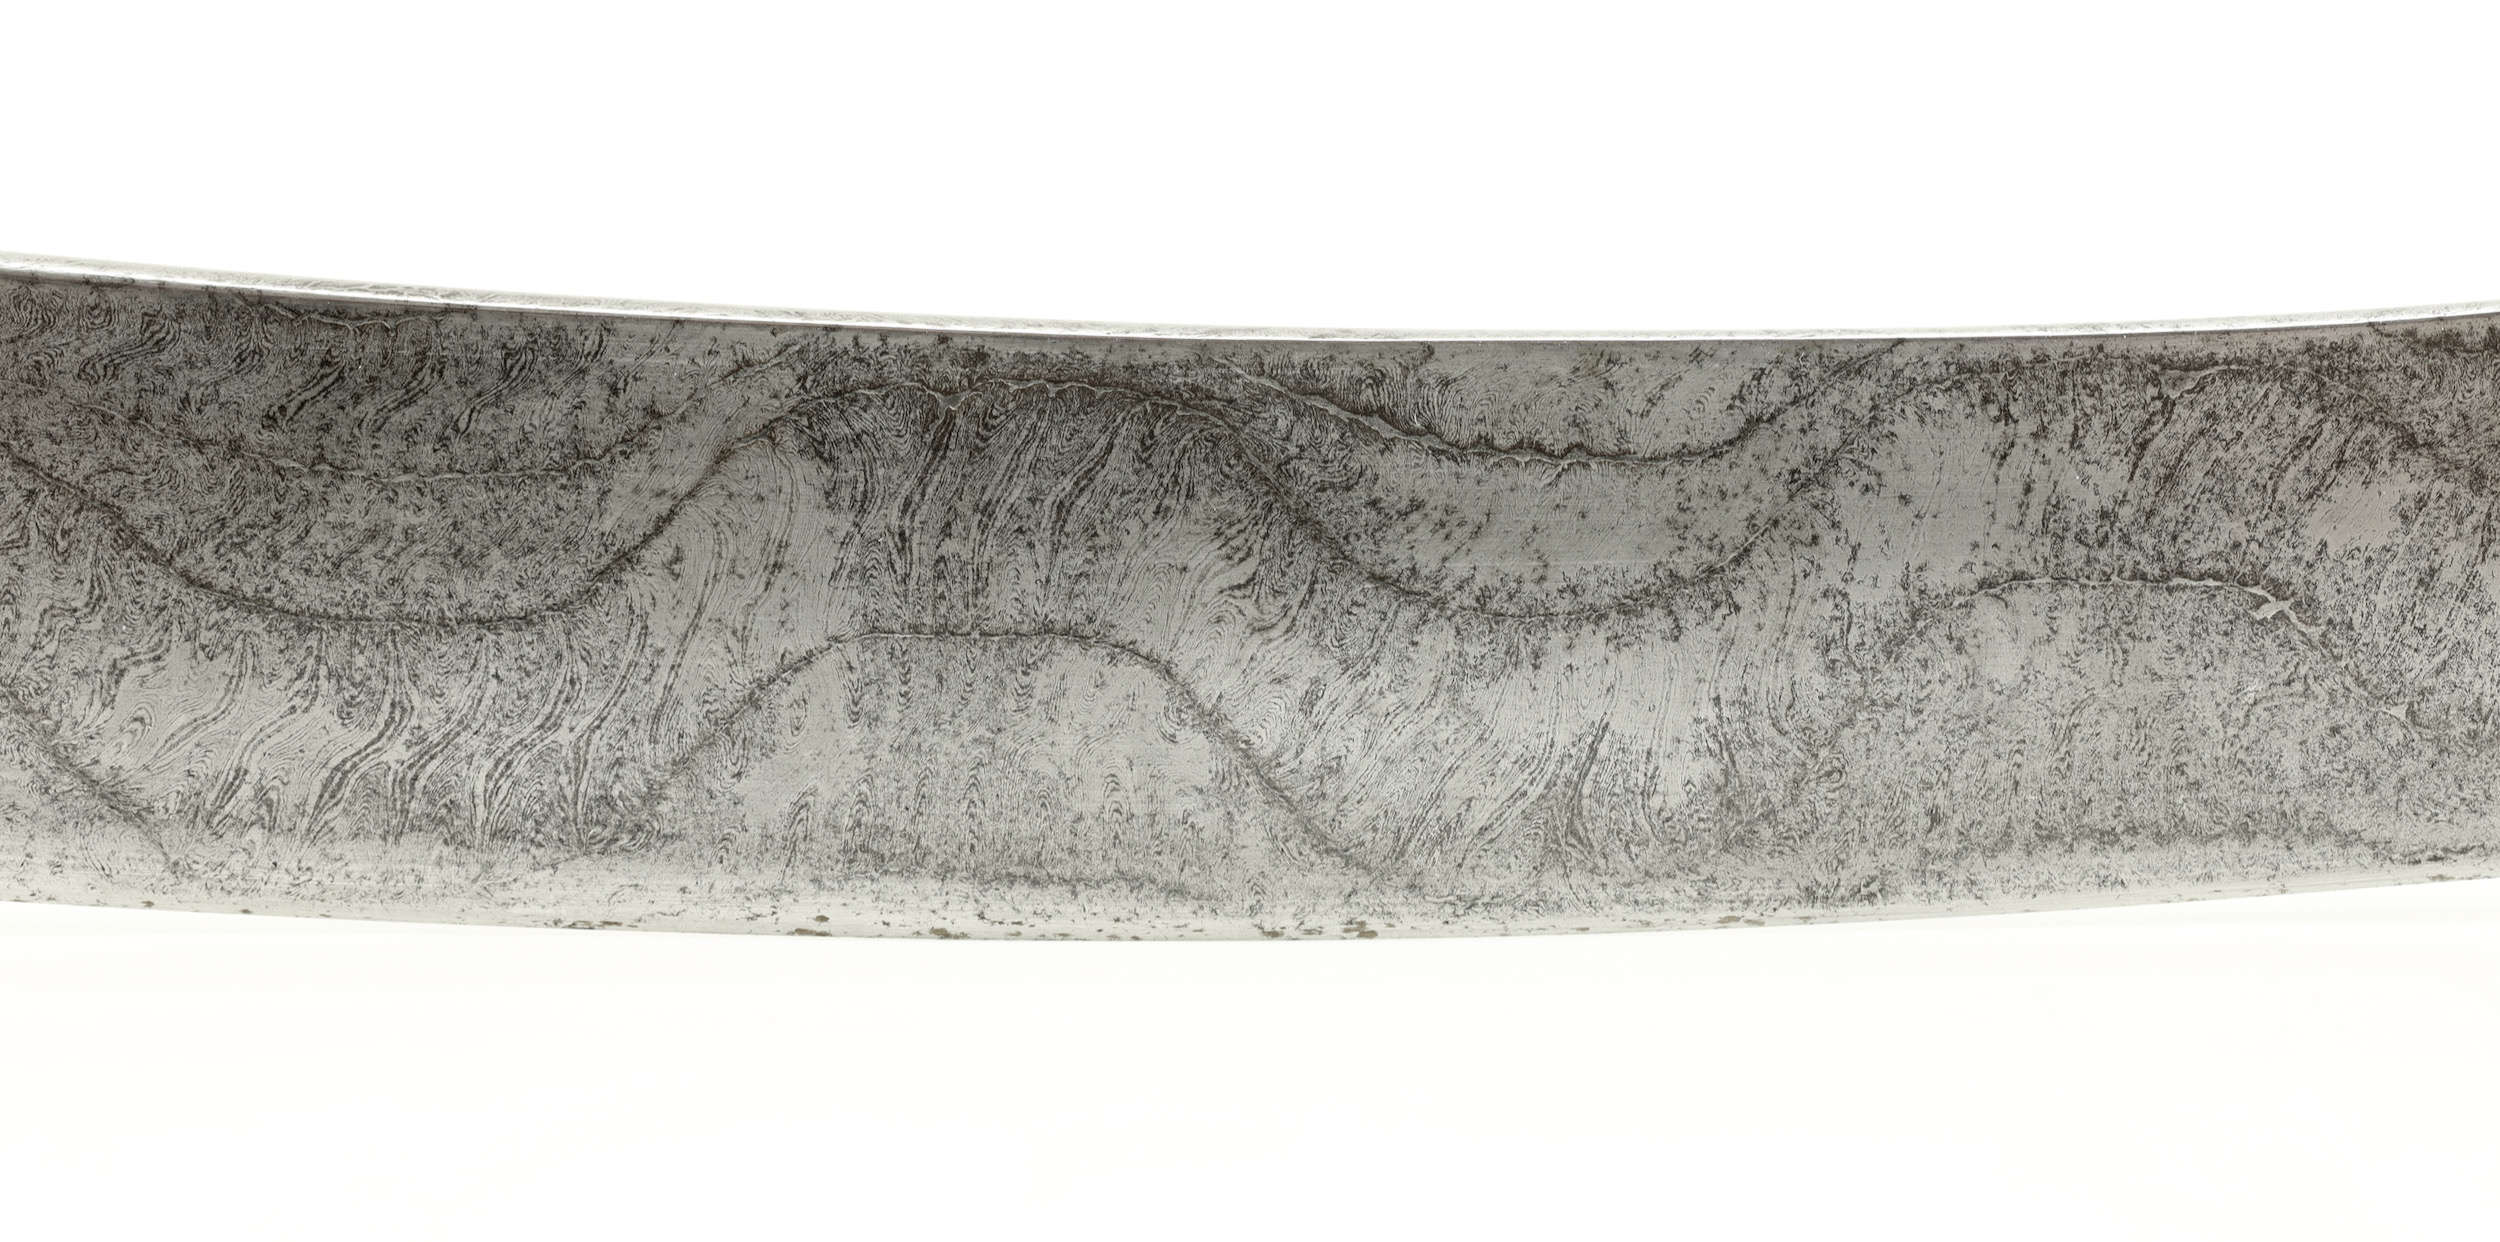 Ottoman turkish ribbon sword